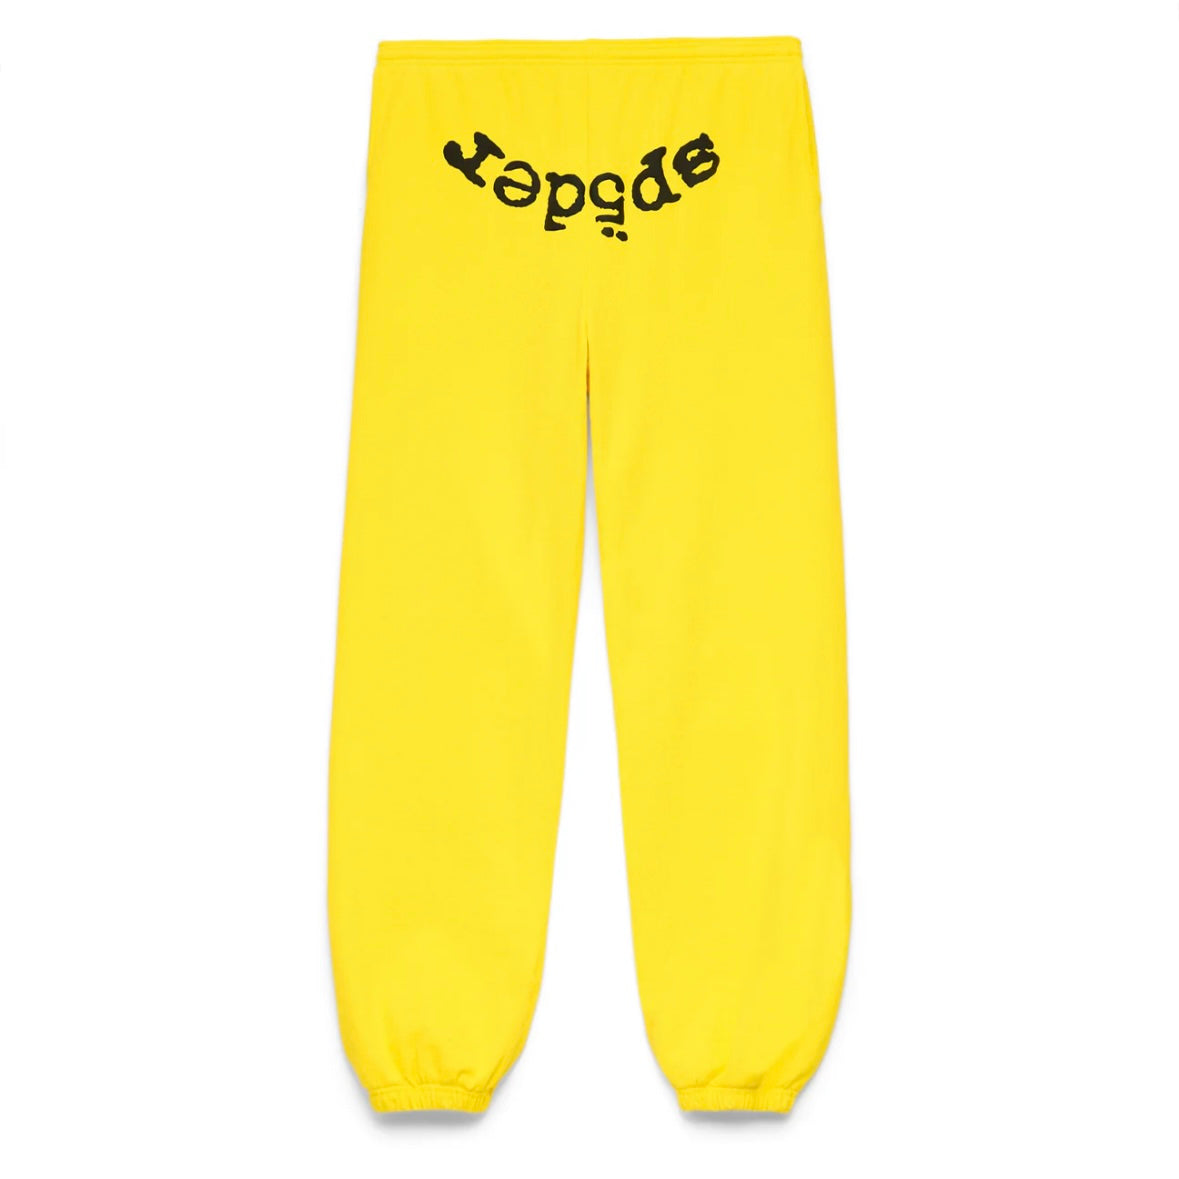 Sp5der Yellow Black Legacy Sweatpants Front